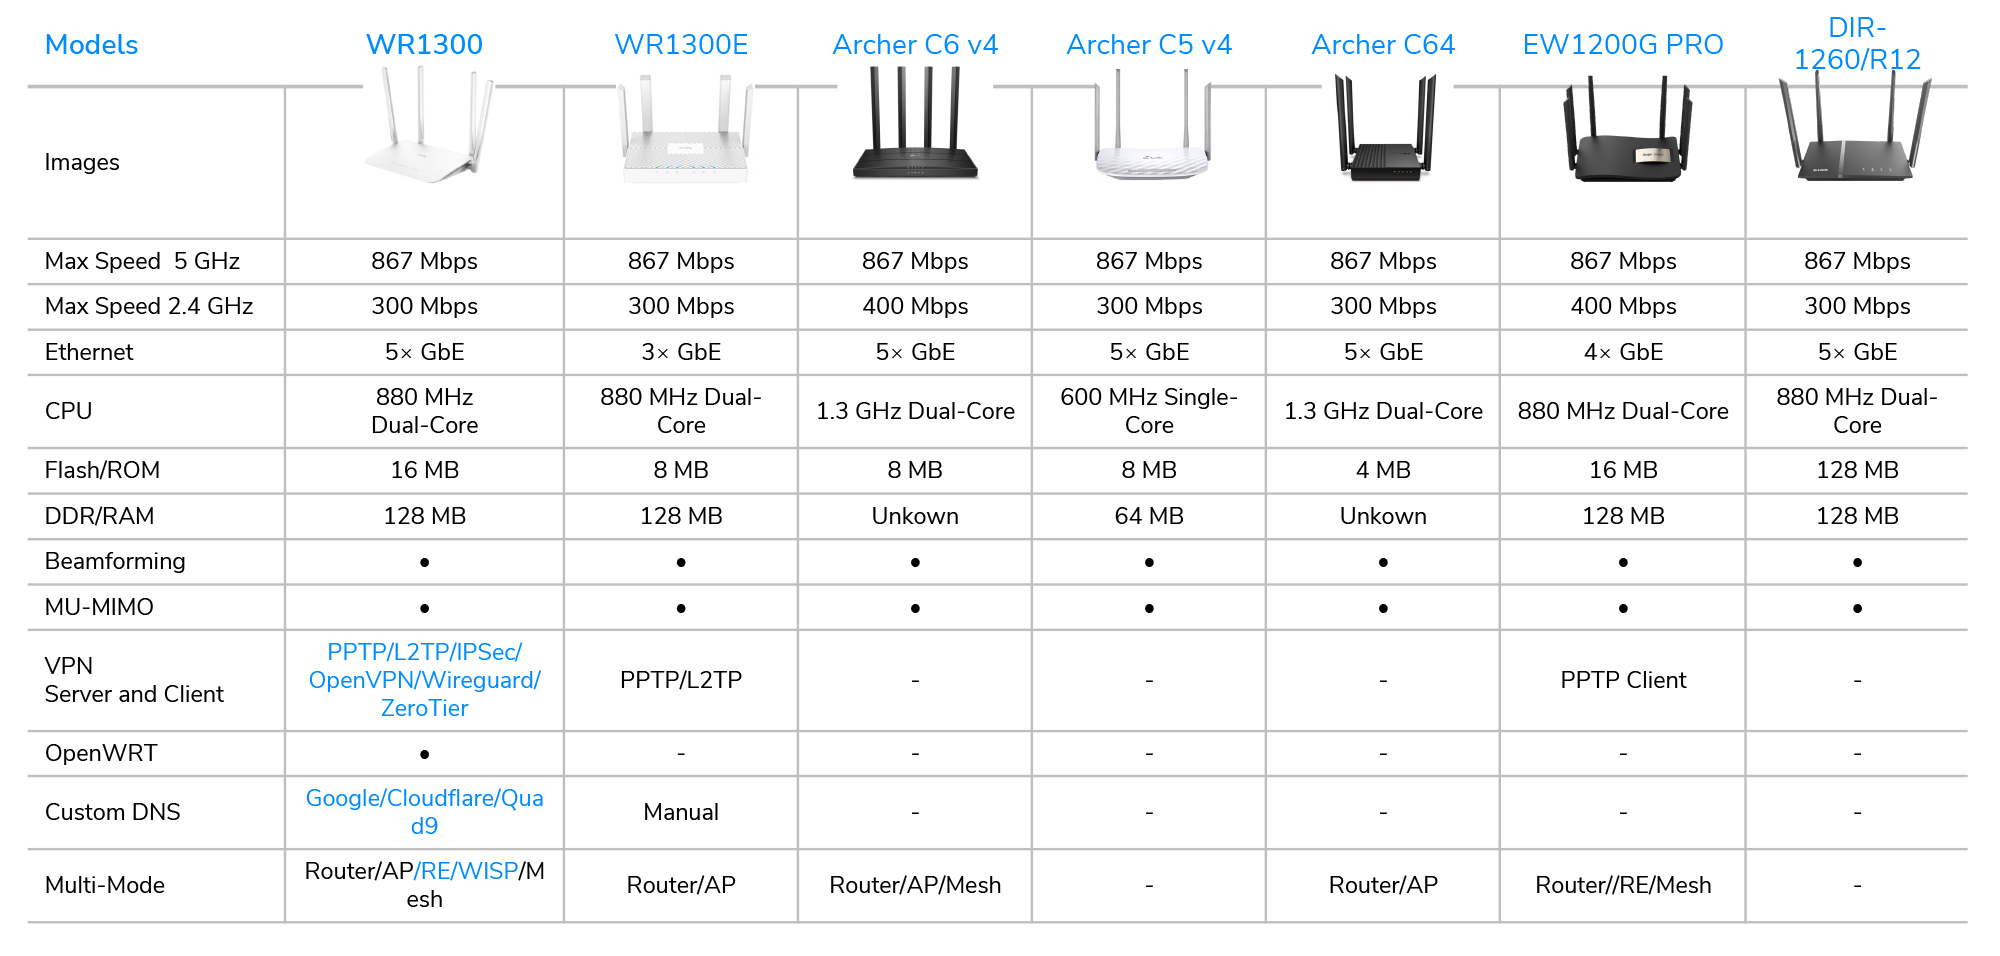 WR1300 porównanie TP-Link Archer C6 v4, TP-Link Archer C5 v4, TP-Link Archer C64, Ruijie Rejee EW1200G PRO i D-LINK DIR-1260/R12